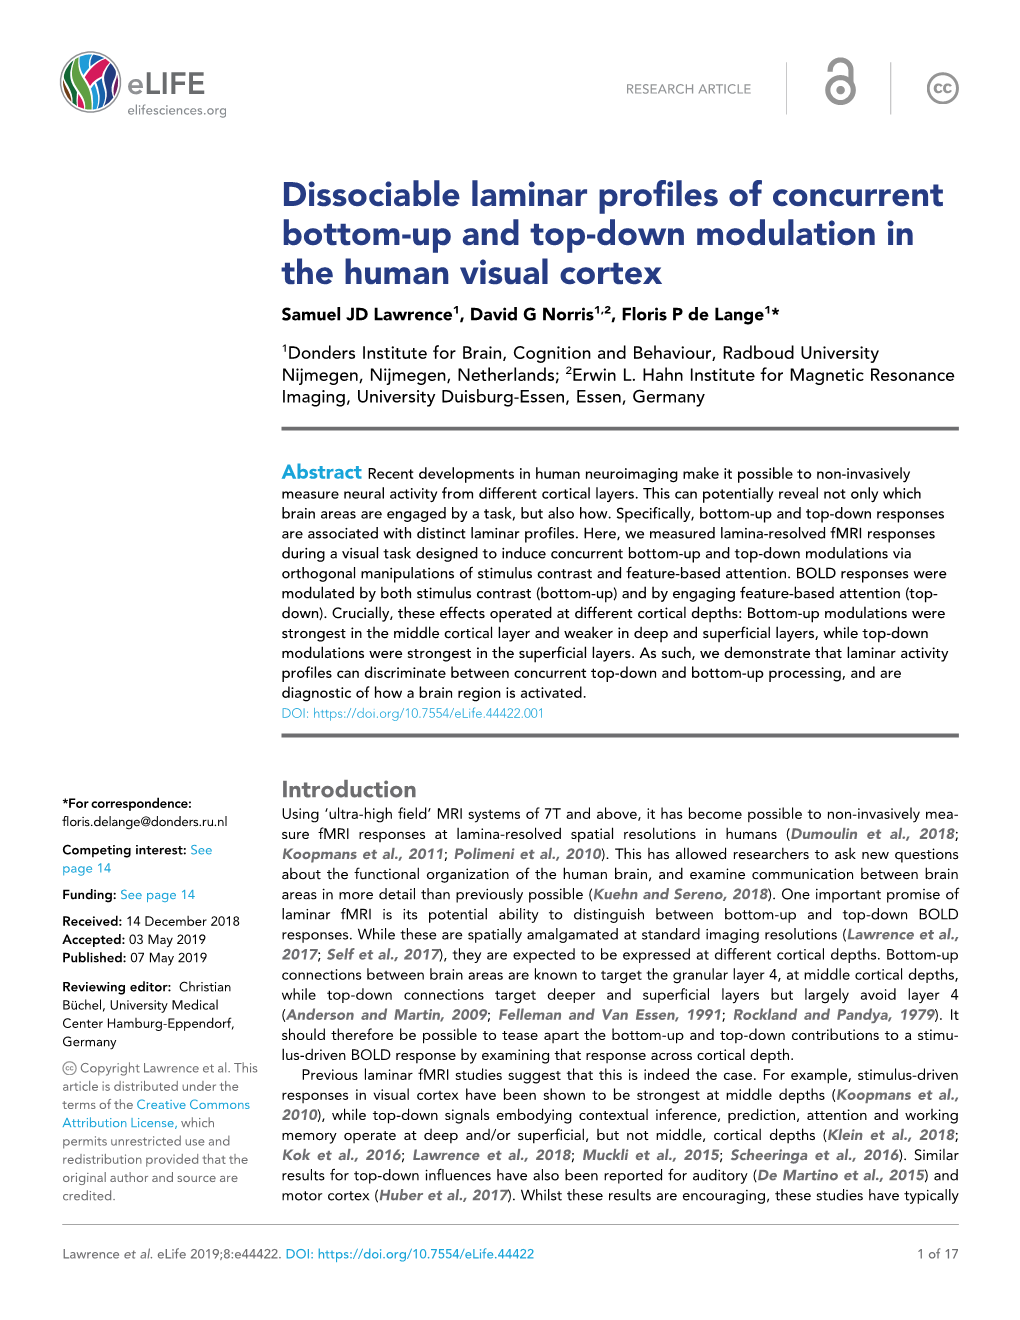 Dissociable Laminar Profiles of Concurrent Bottom-Up and Top-Down Modulation in the Human Visual Cortex Samuel JD Lawrence1, David G Norris1,2, Floris P De Lange1*